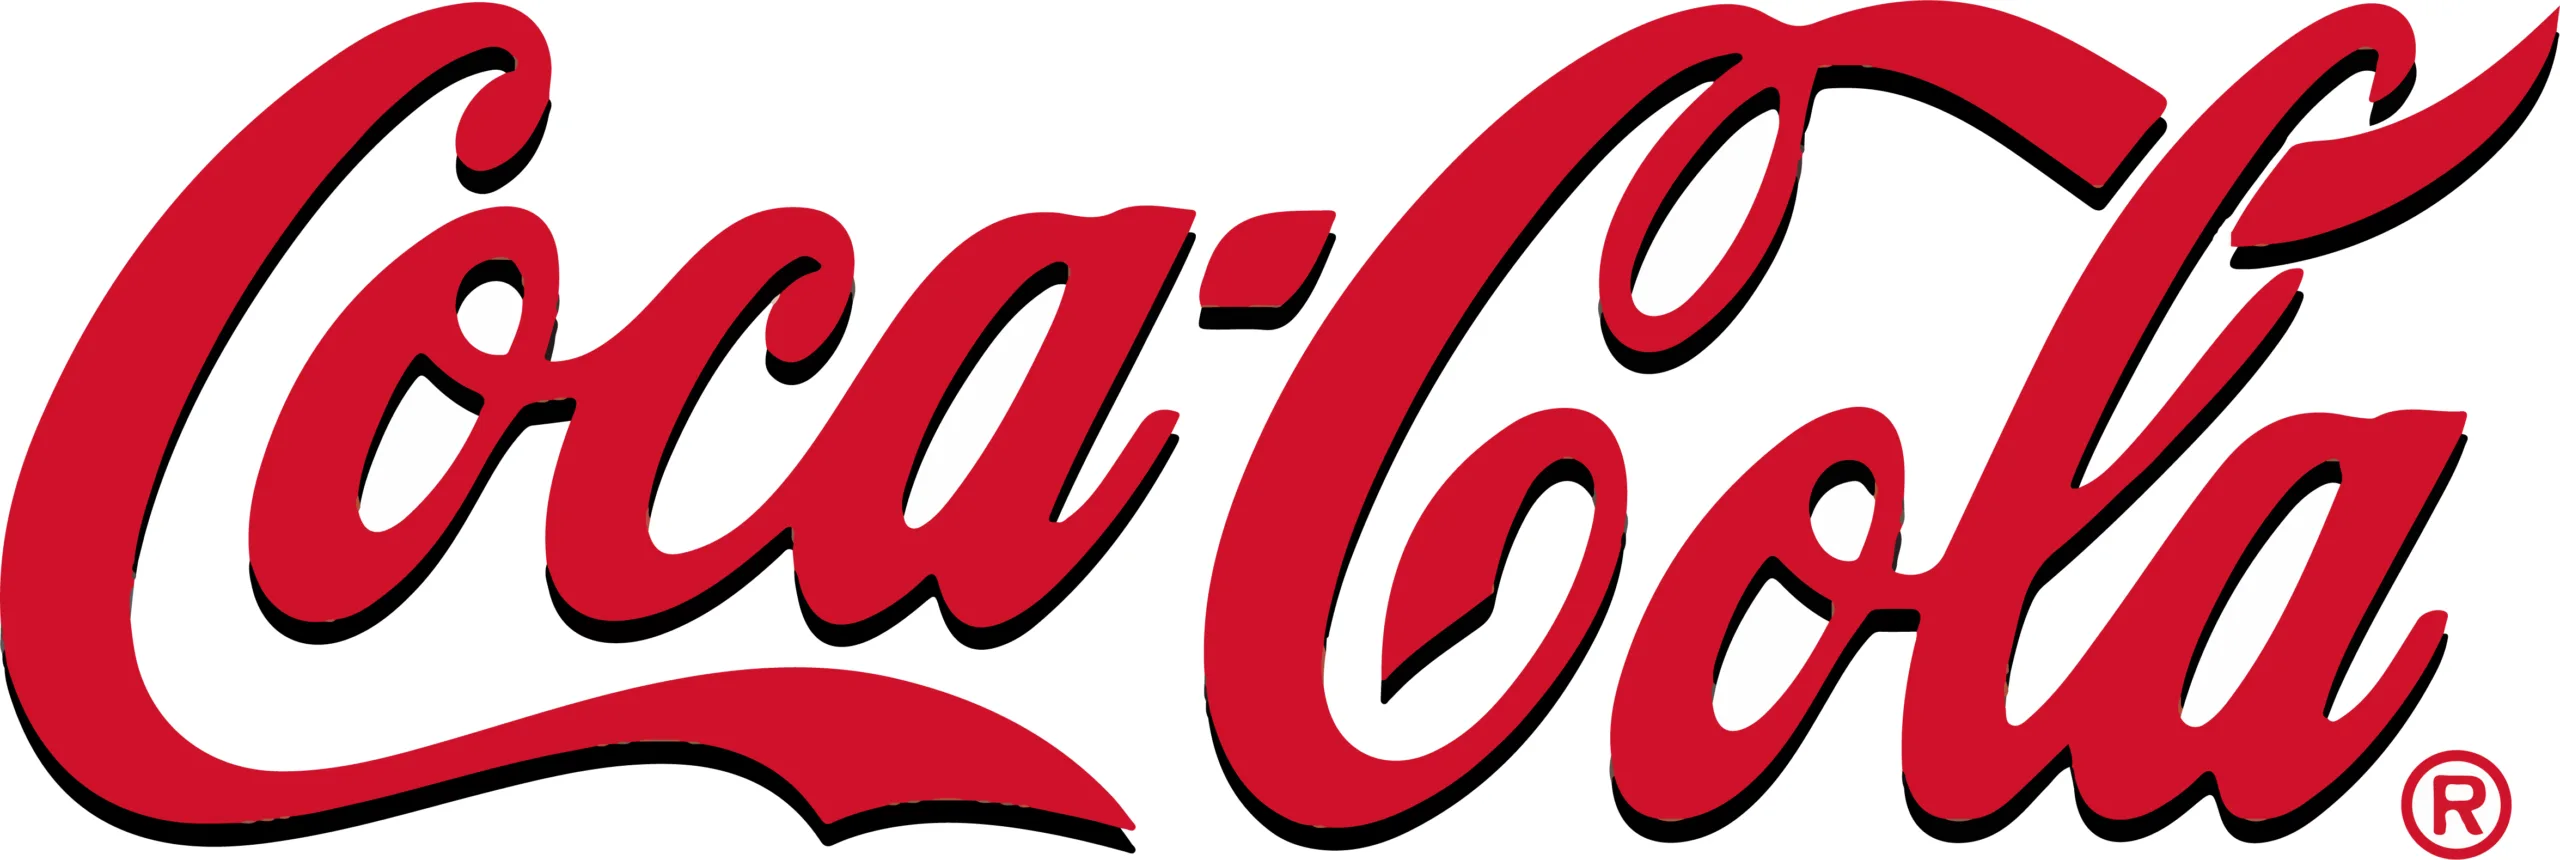 coca_cola_logo2